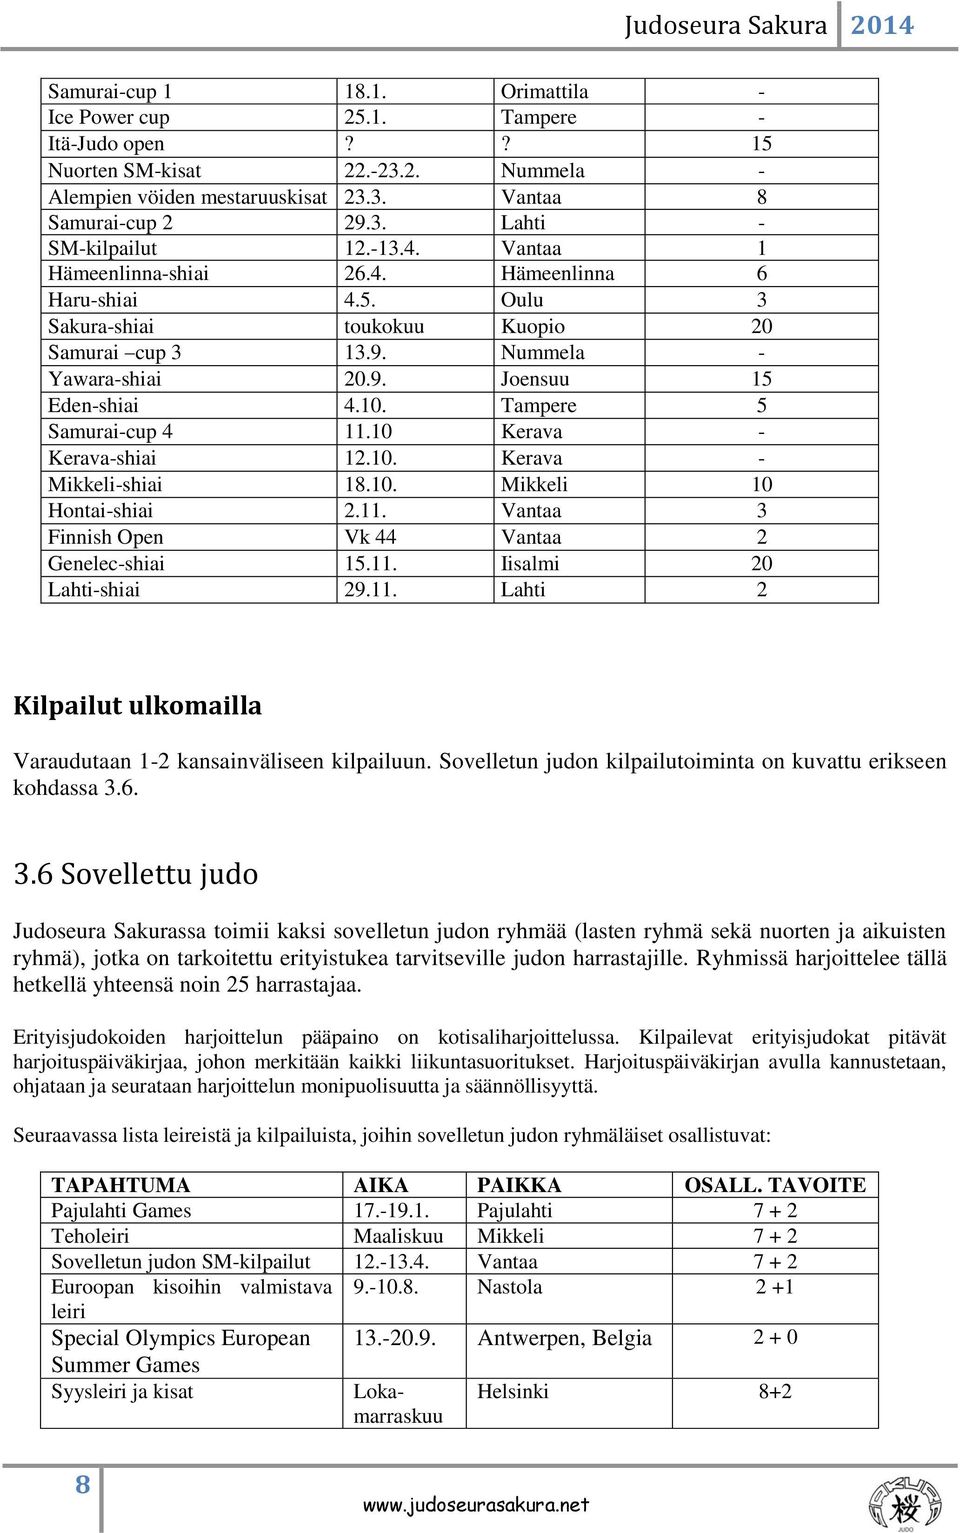 Tampere 5 Samurai-cup 4 11.10 Kerava - Kerava-shiai 12.10. Kerava - Mikkeli-shiai 18.10. Mikkeli 10 Hontai-shiai 2.11. Vantaa 3 Finnish Open Vk 44 Vantaa 2 Genelec-shiai 15.11. Iisalmi 20 Lahti-shiai 29.